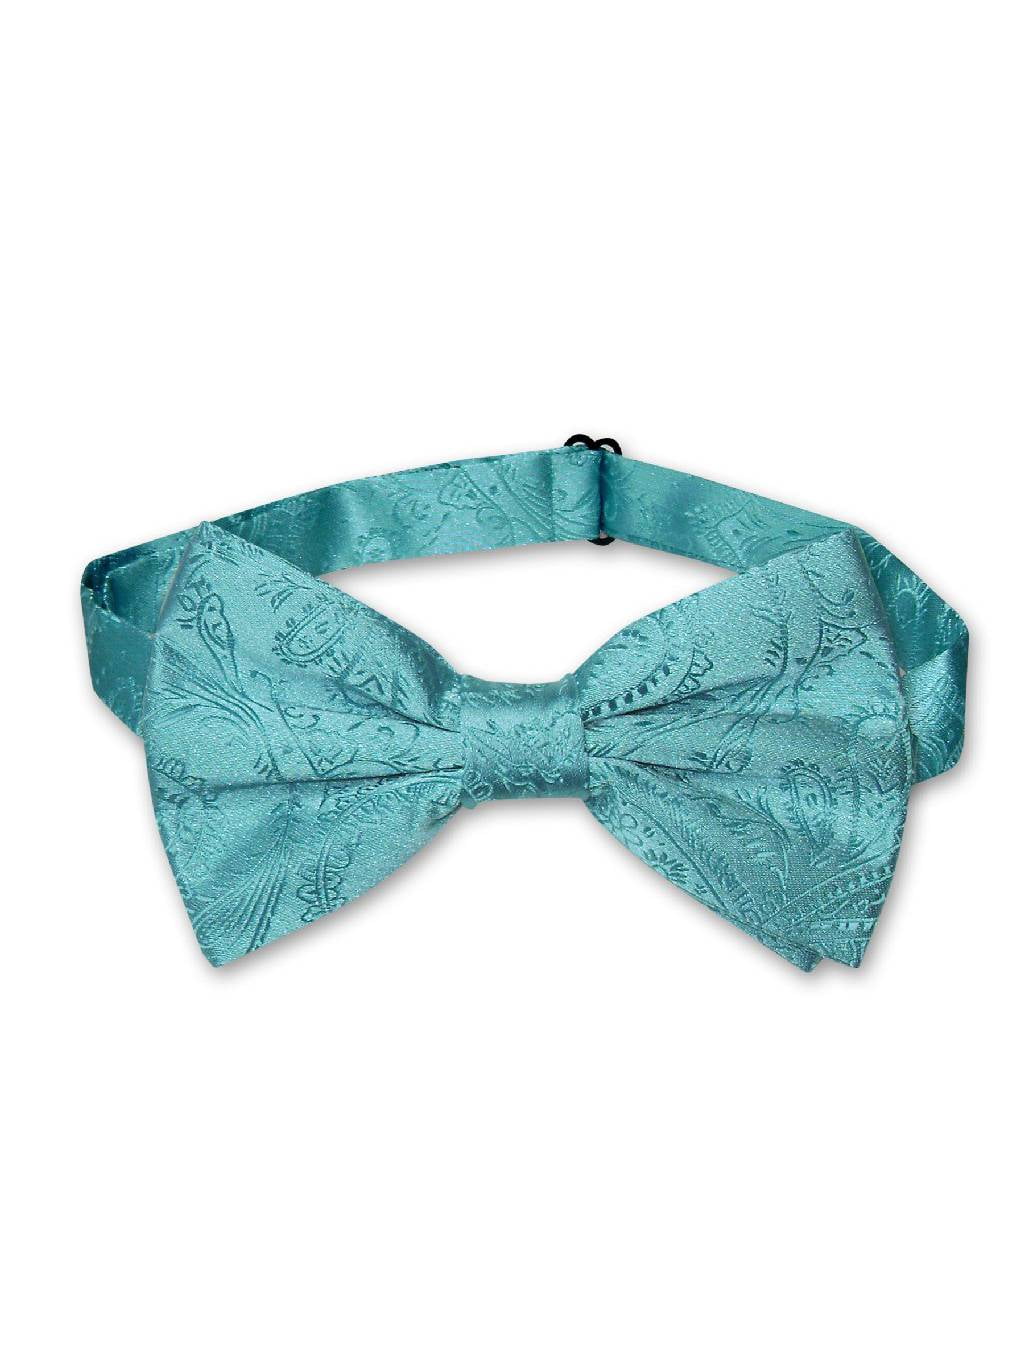 Vesuvio Napoli BowTie Turquoise Aqua Blue Paisley Mens Bow Tie & Handkerchief